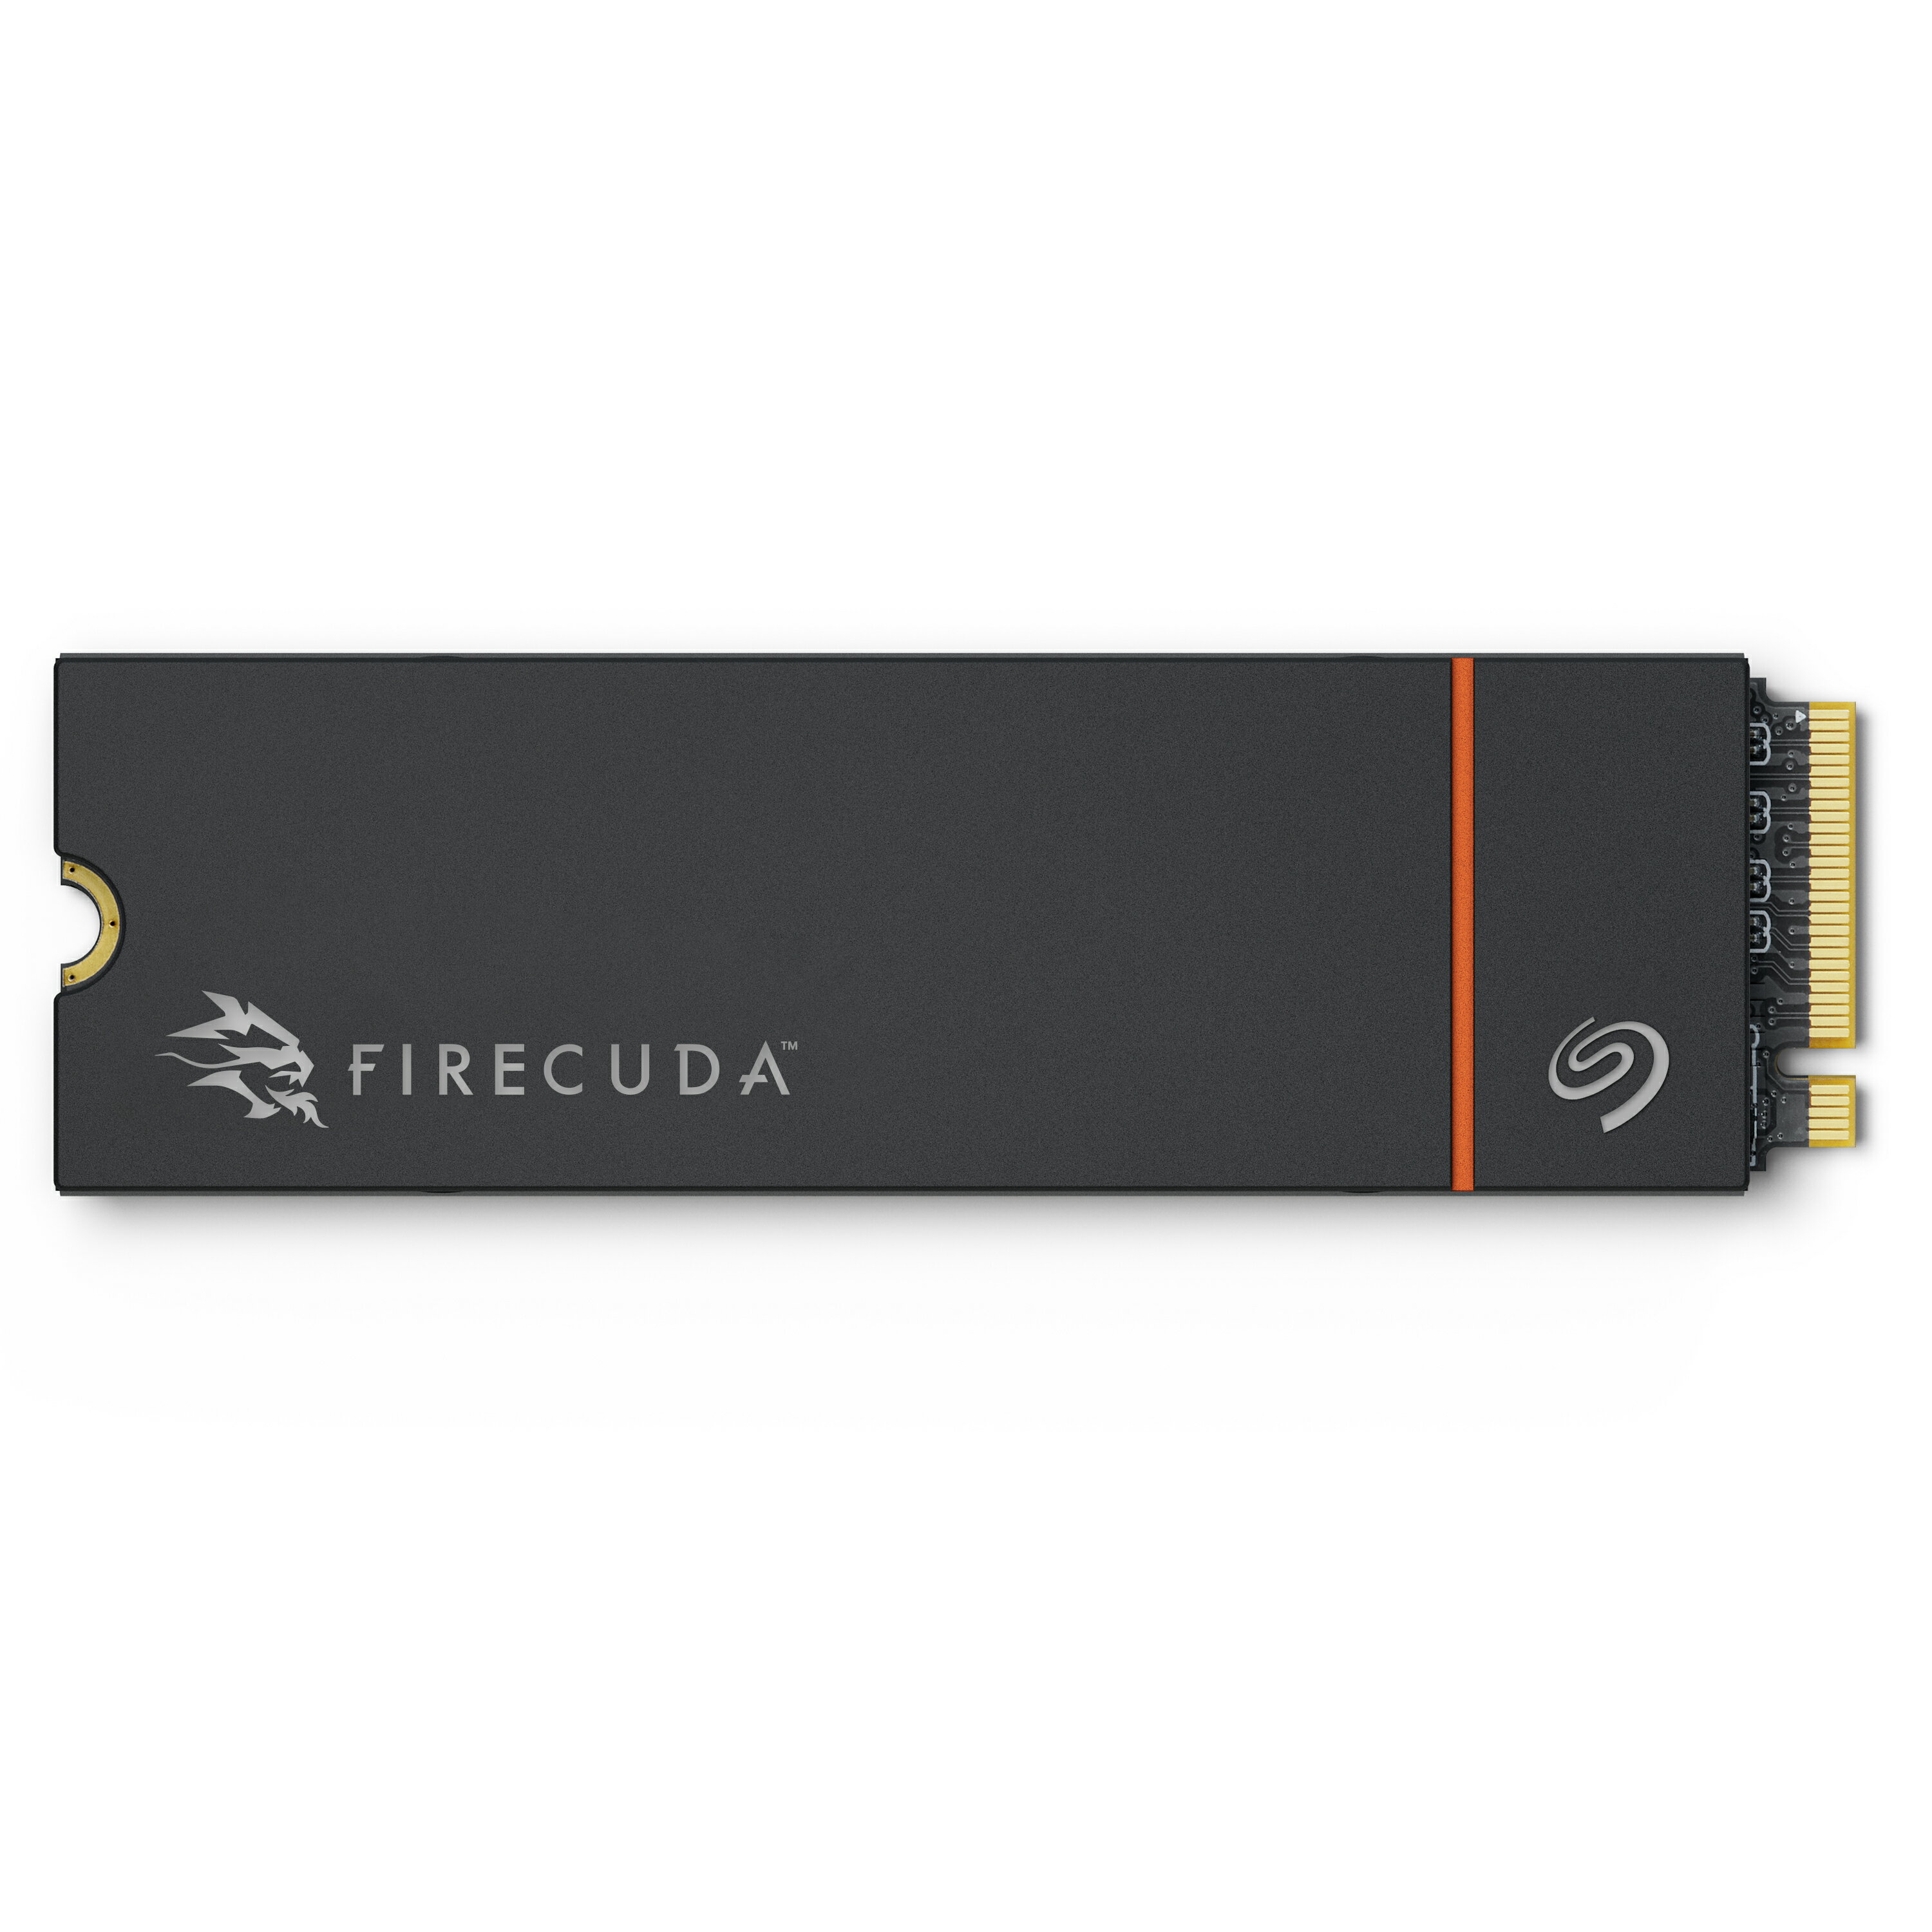 Seagate シーゲイト FireCuda 530 M.2 内蔵 SSD ヒートシンク付き 【PS5 動作確認済み】 4TB PCIe Gen4 x4 読取速度 …